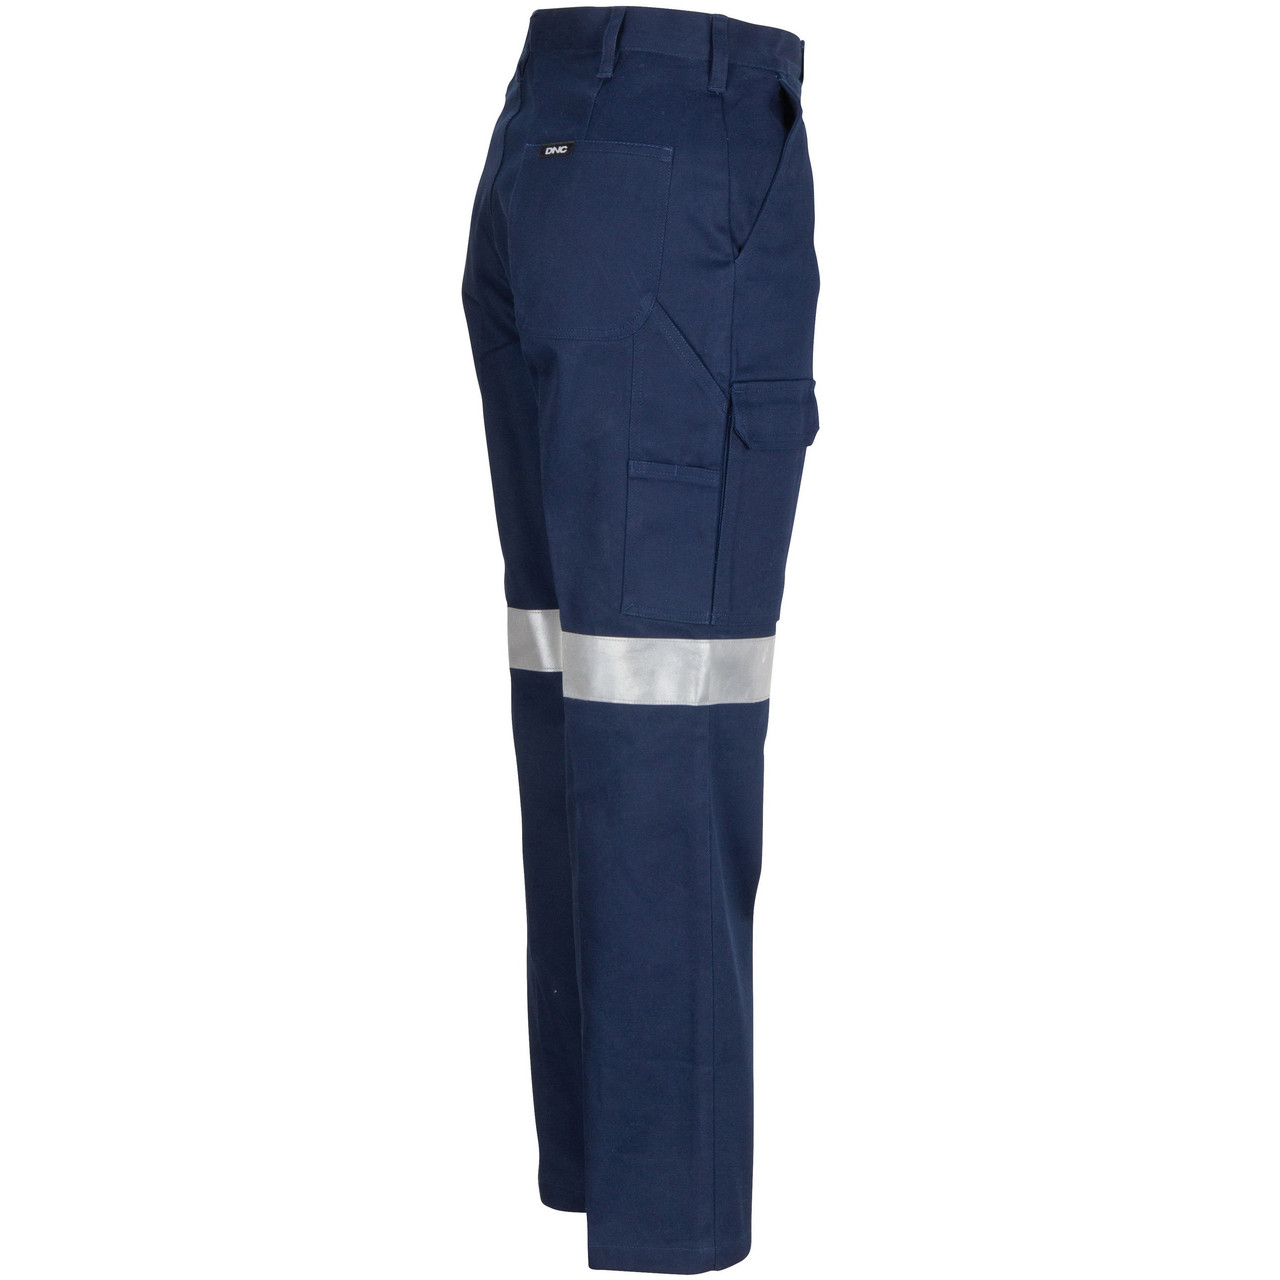 Cargo Pants For Women - Buy Cargo Joggers For Women online at Best Prices  in India | Flipkart.com